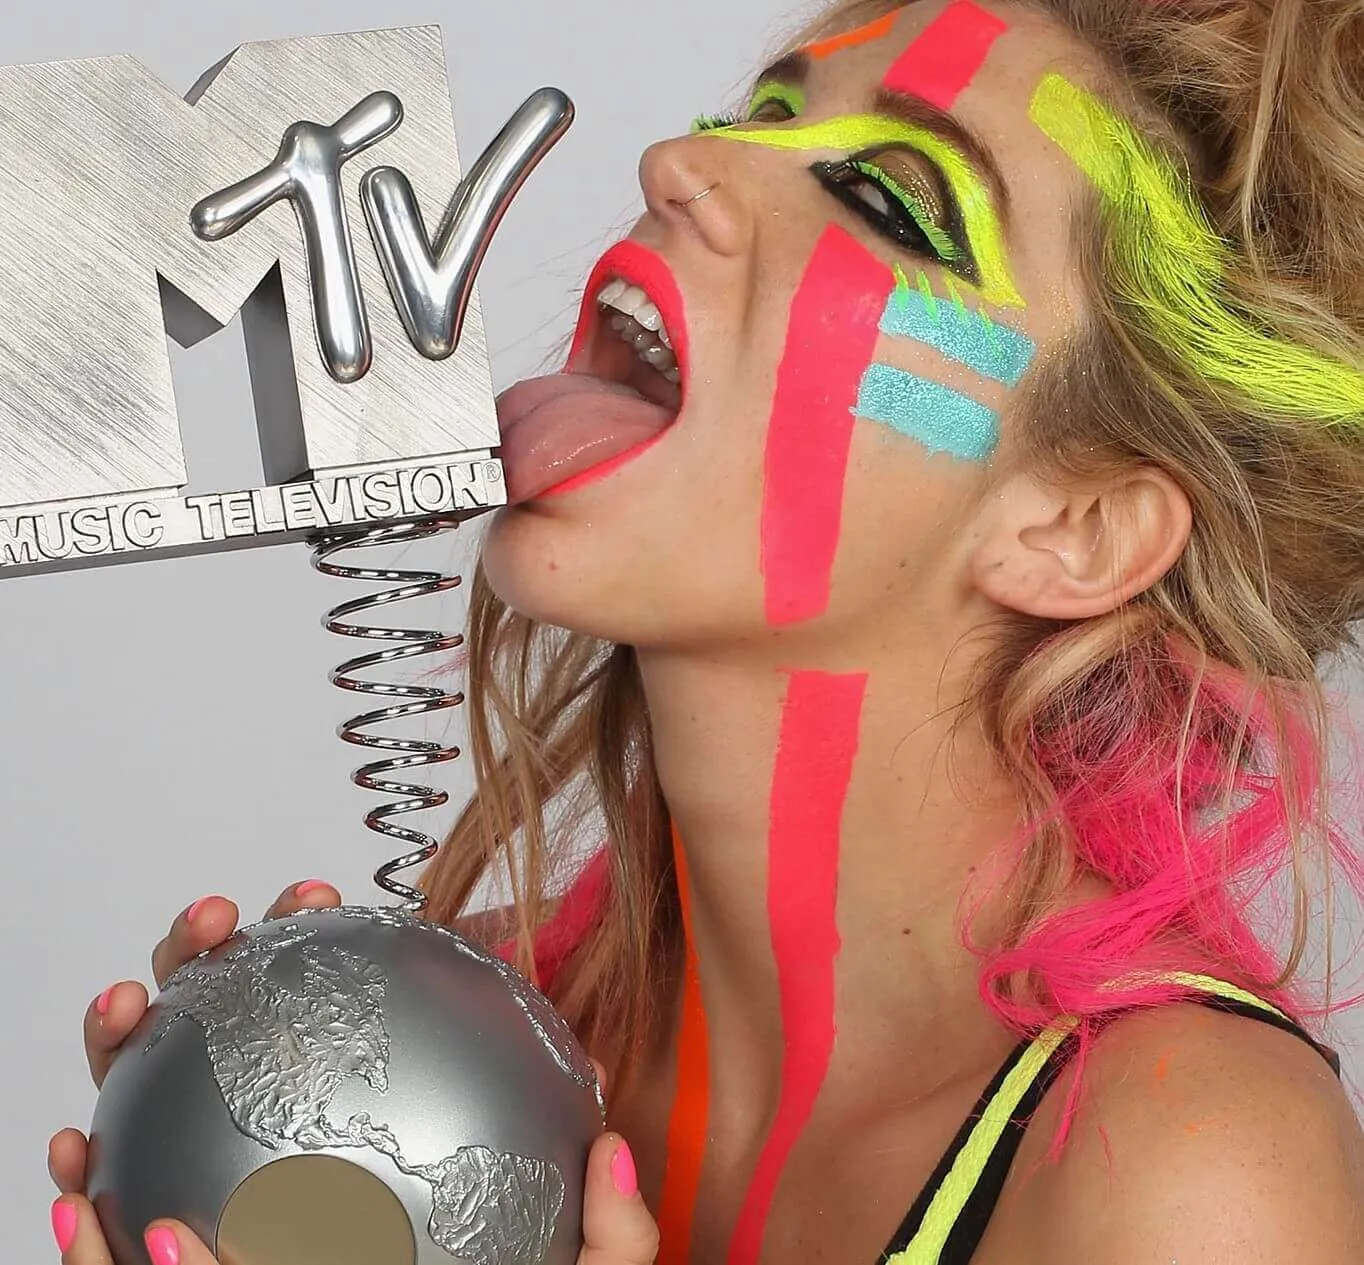 Kesha licking an award